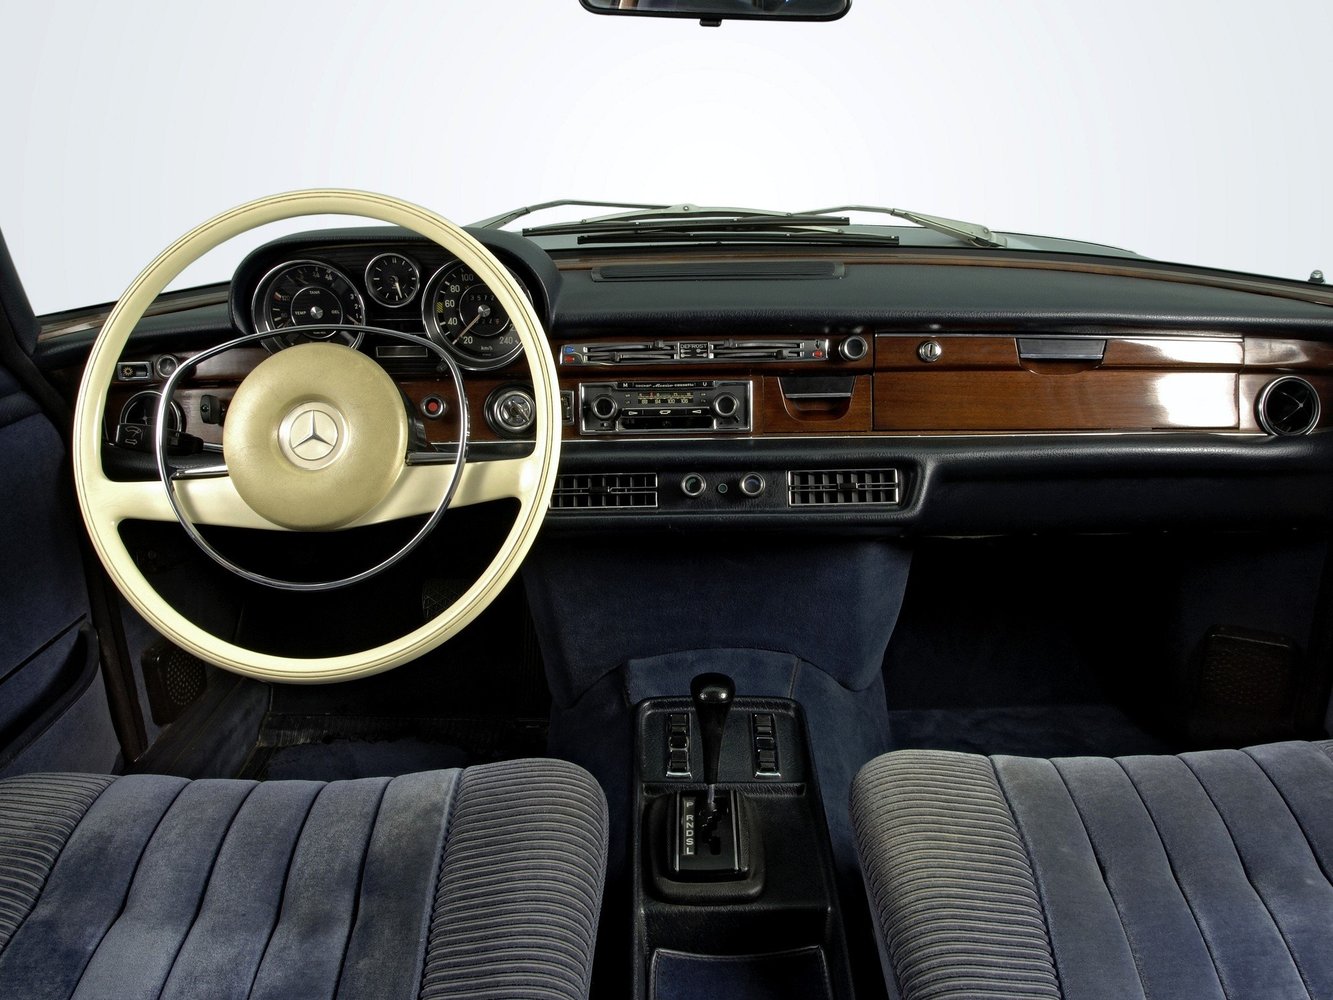 седан Mercedes-Benz S-klasse 1965 - 1972г выпуска модификация 2.5 AT (130 л.с.)